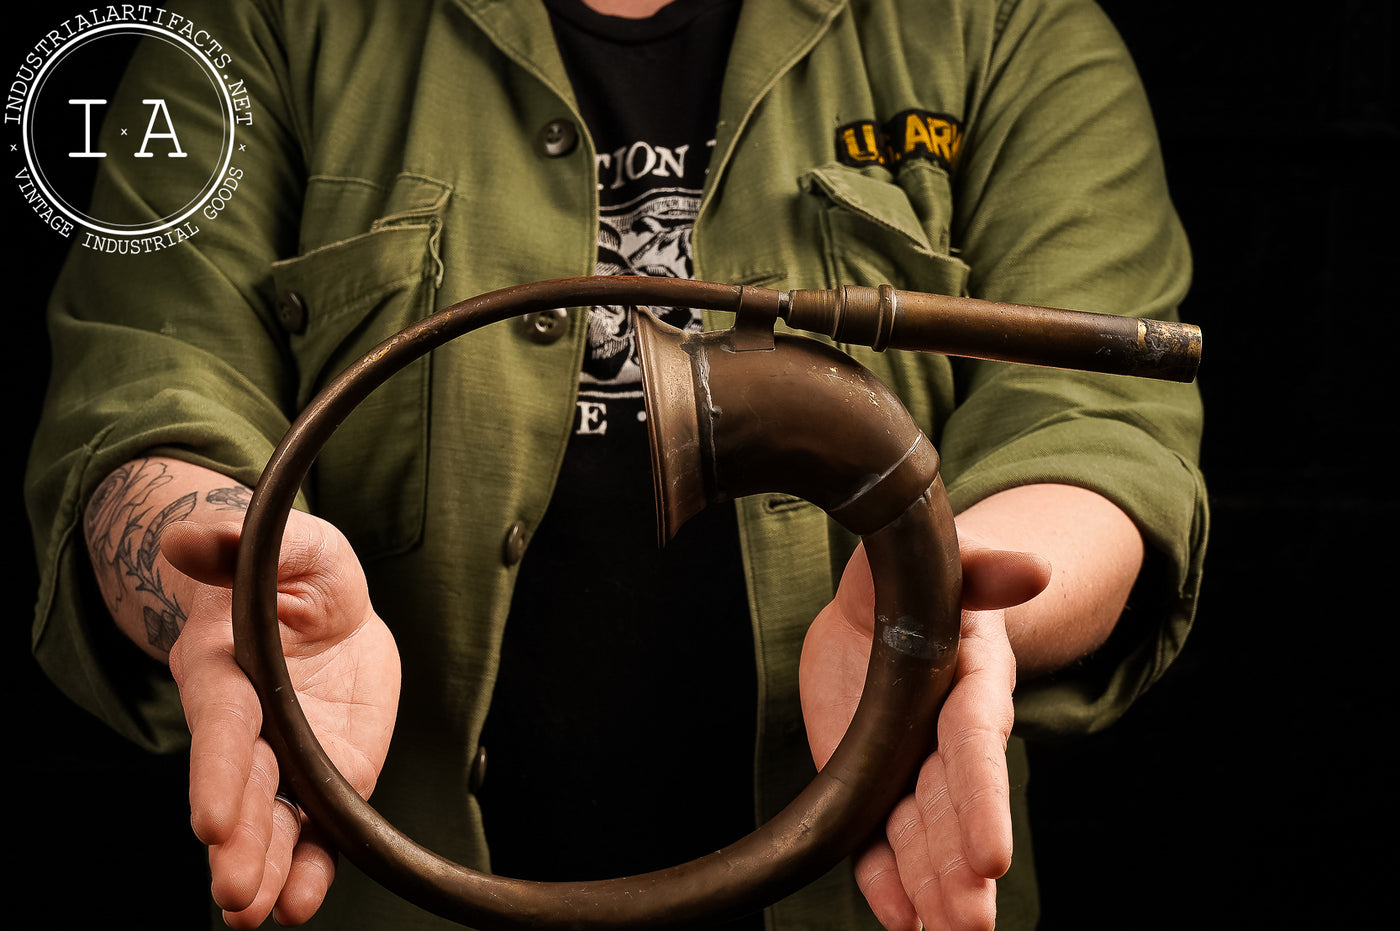 Antique Circular Brass Car Horn